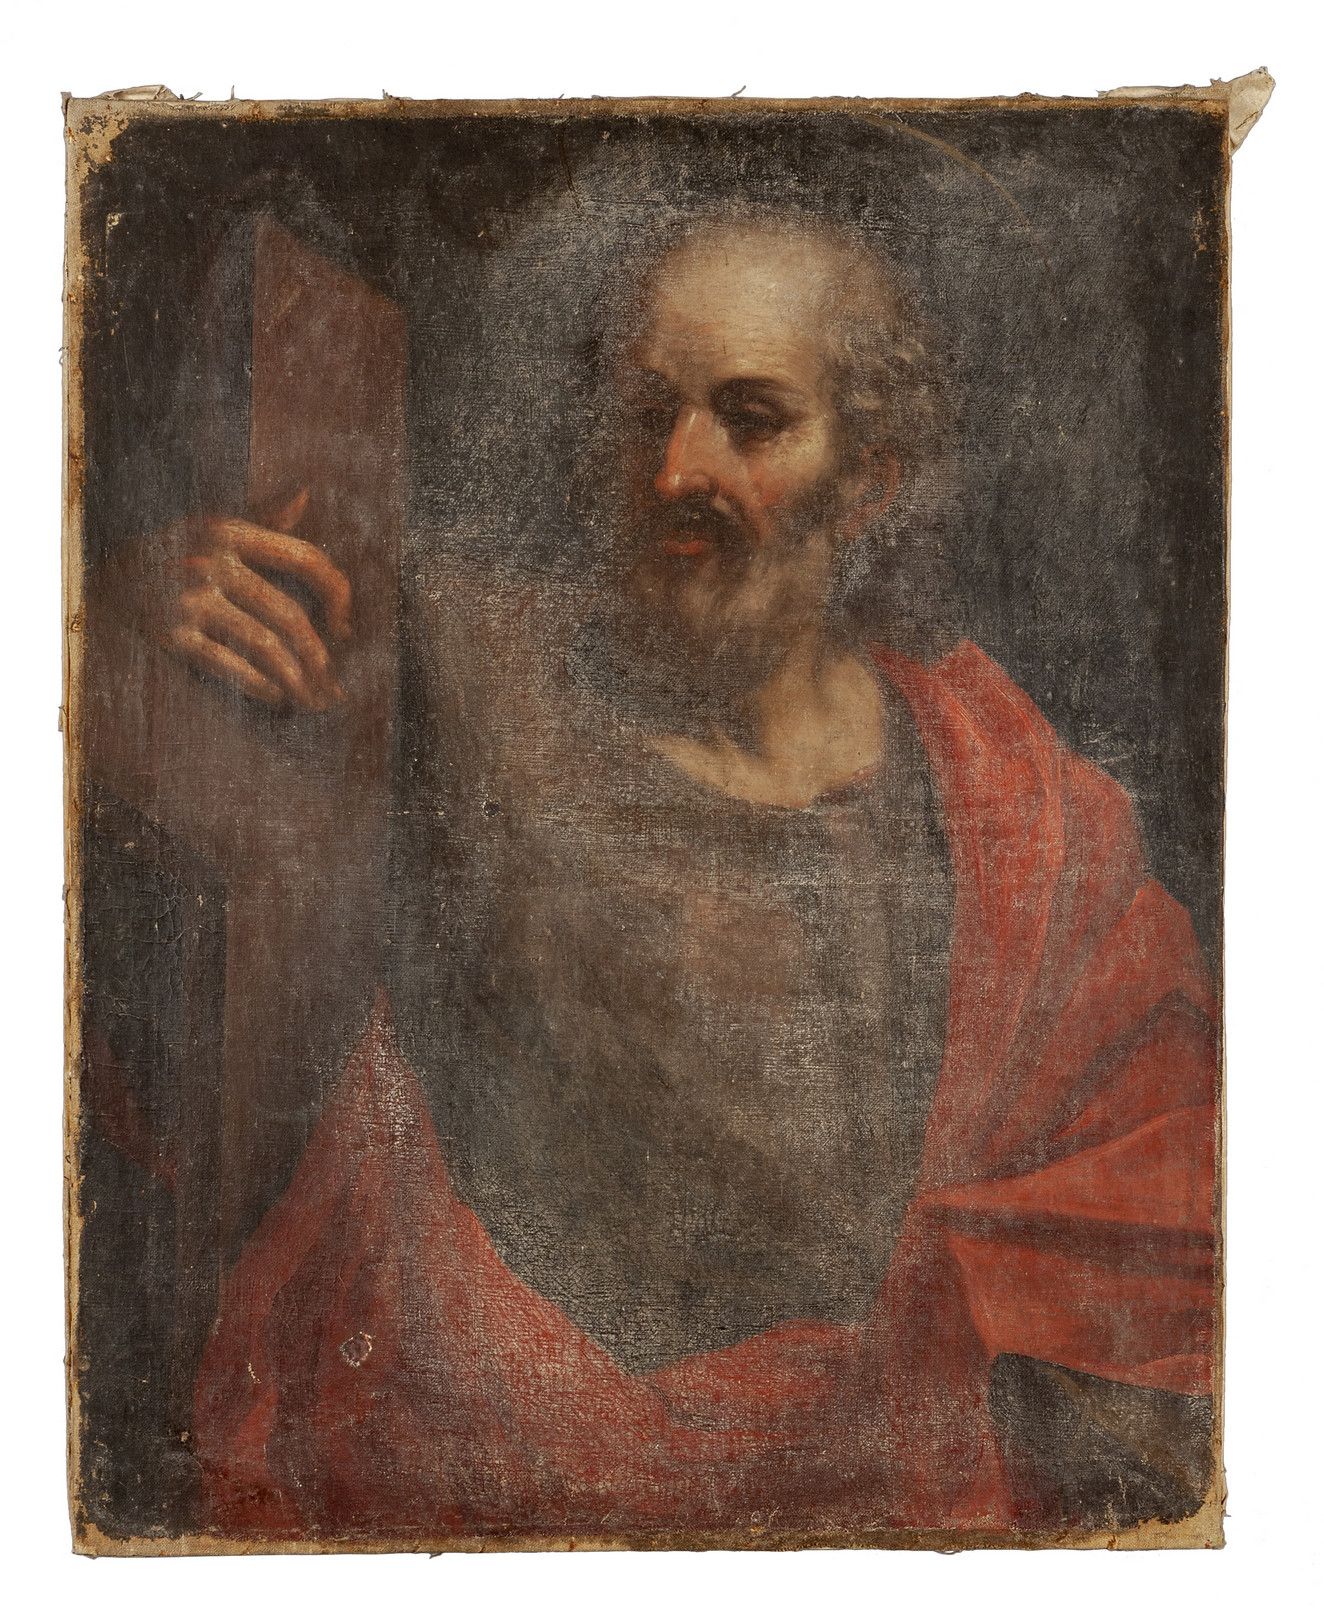 Scuola italiana sec.XVIII "San Pietro" 意大利学校 十八世纪的 "圣彼得 "油画
cm. 63x80